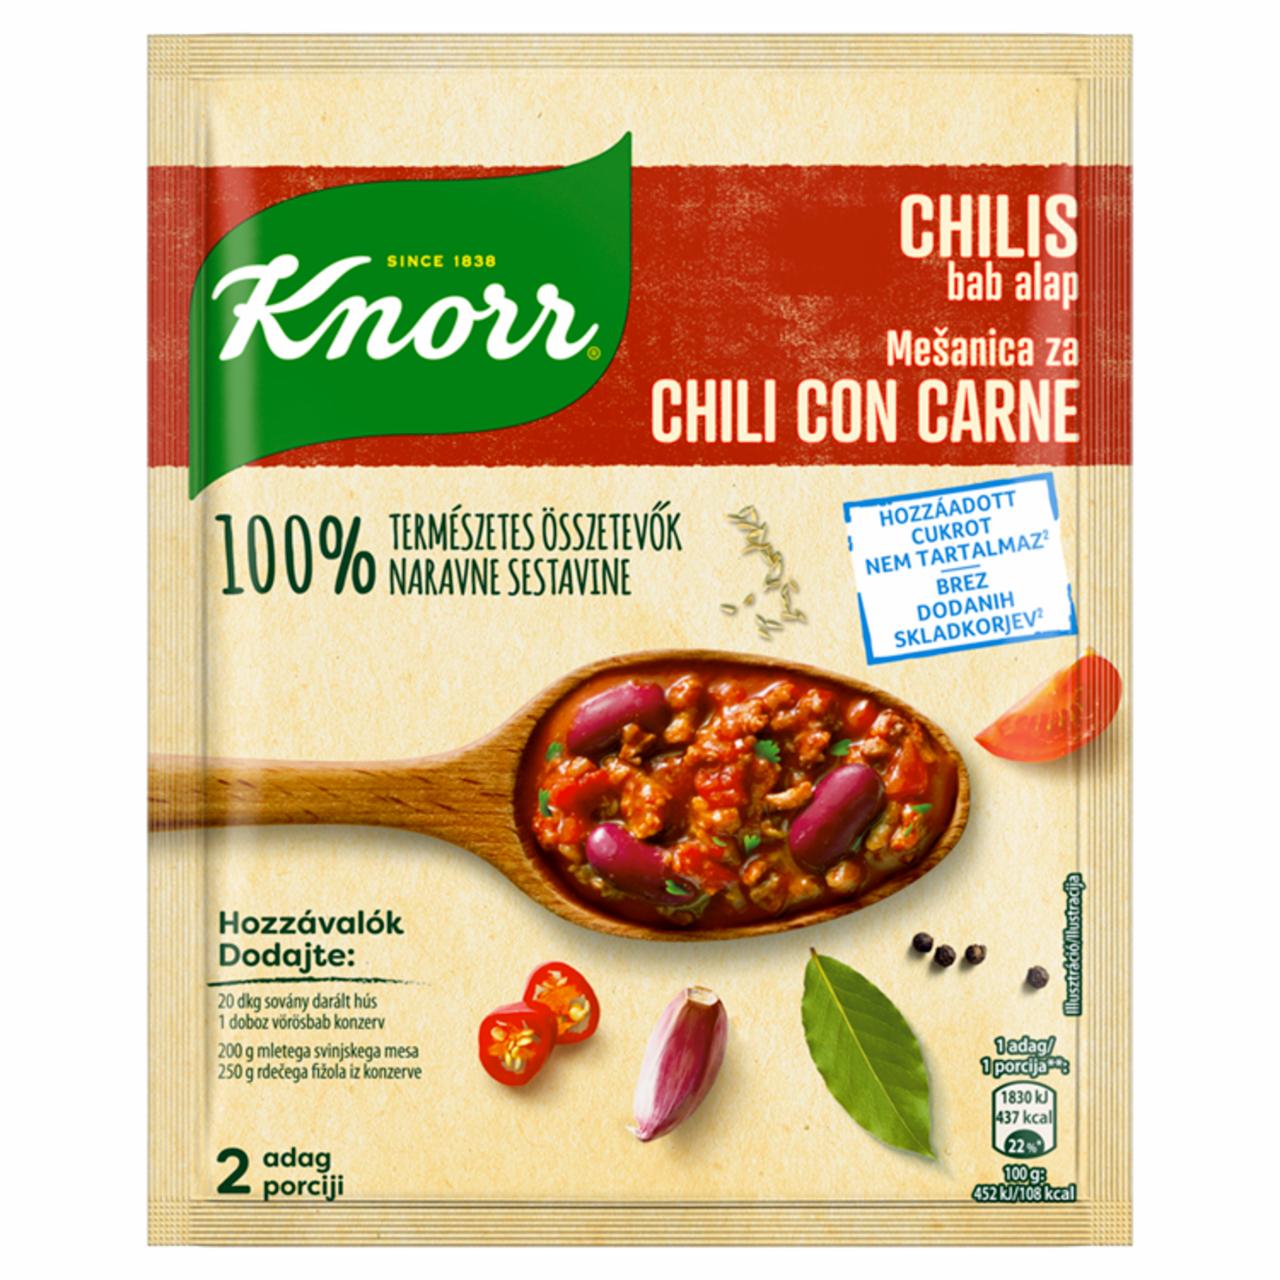 Képek - Knorr chilis bab alap 47 g